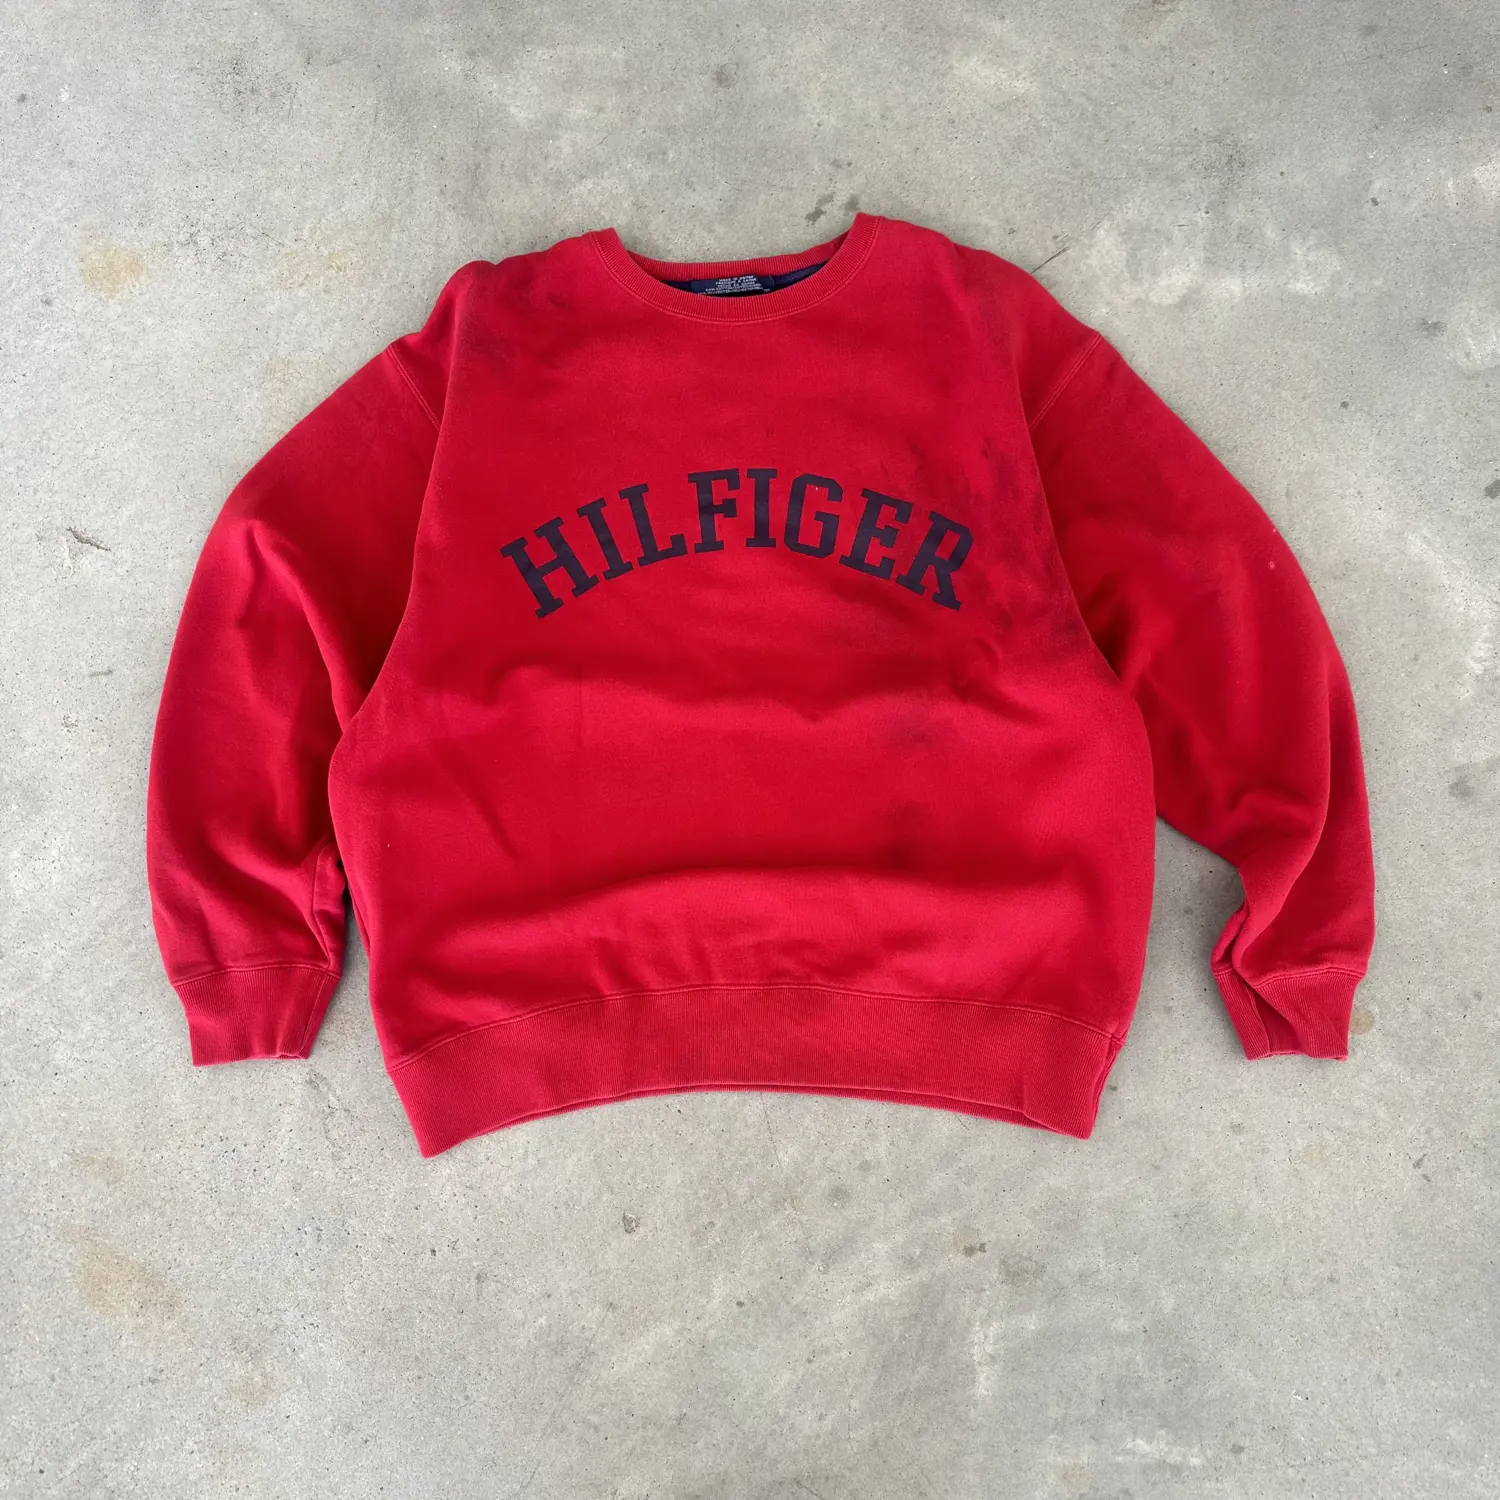 Vintage 90's Tommy Hilfiger Red Sweatshirt